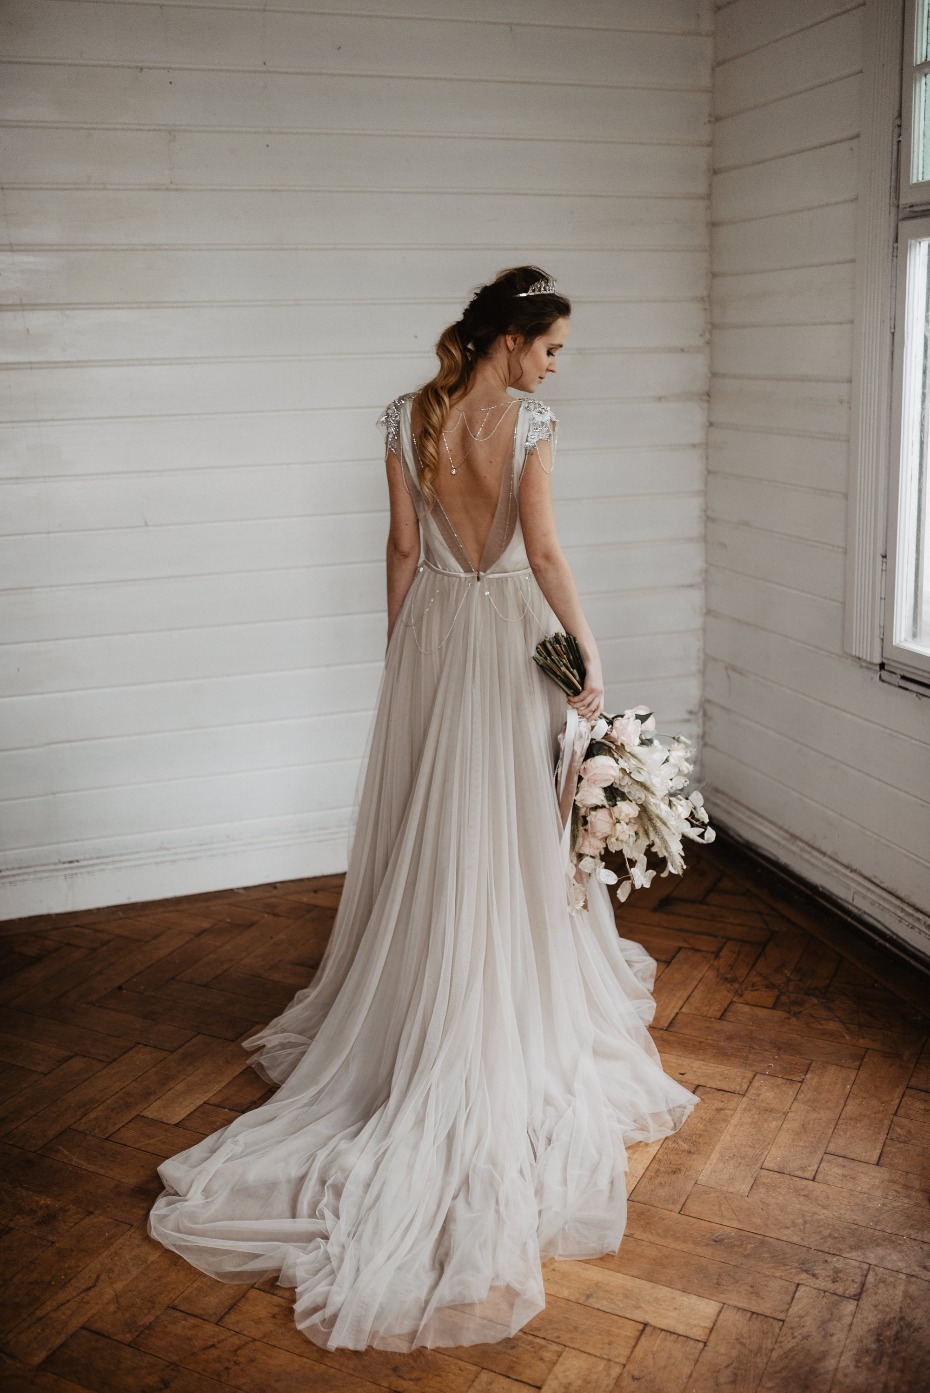 Soft smokey silver wedding dress with tulle train